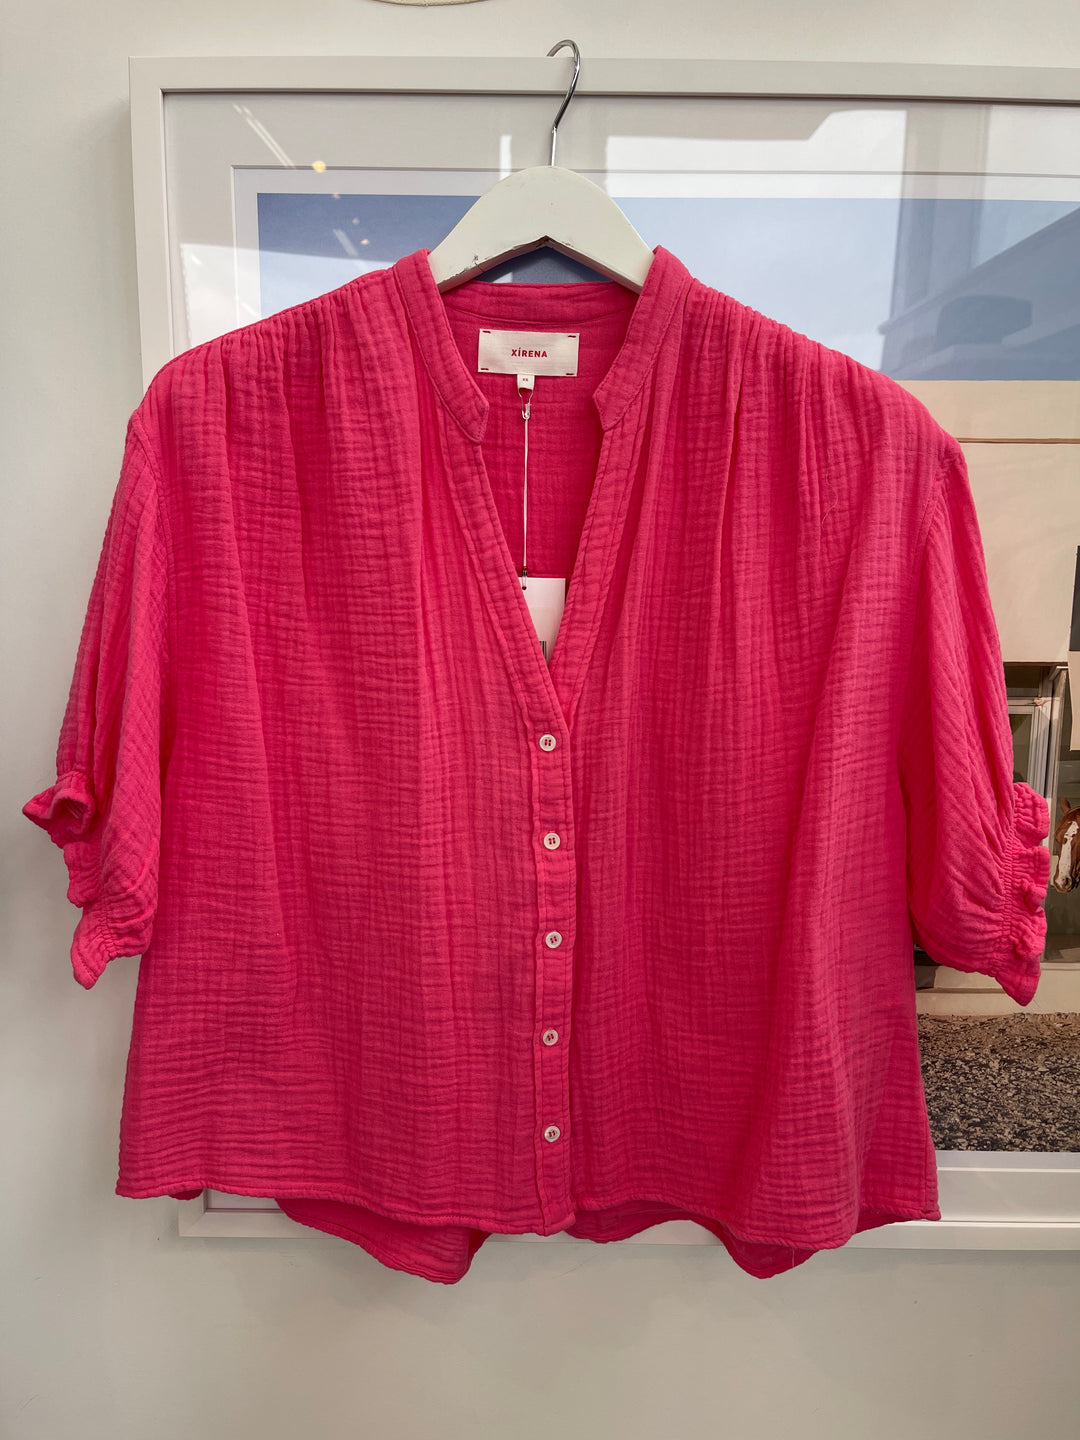 Xirena - Alyss Shirt in Hot Pink